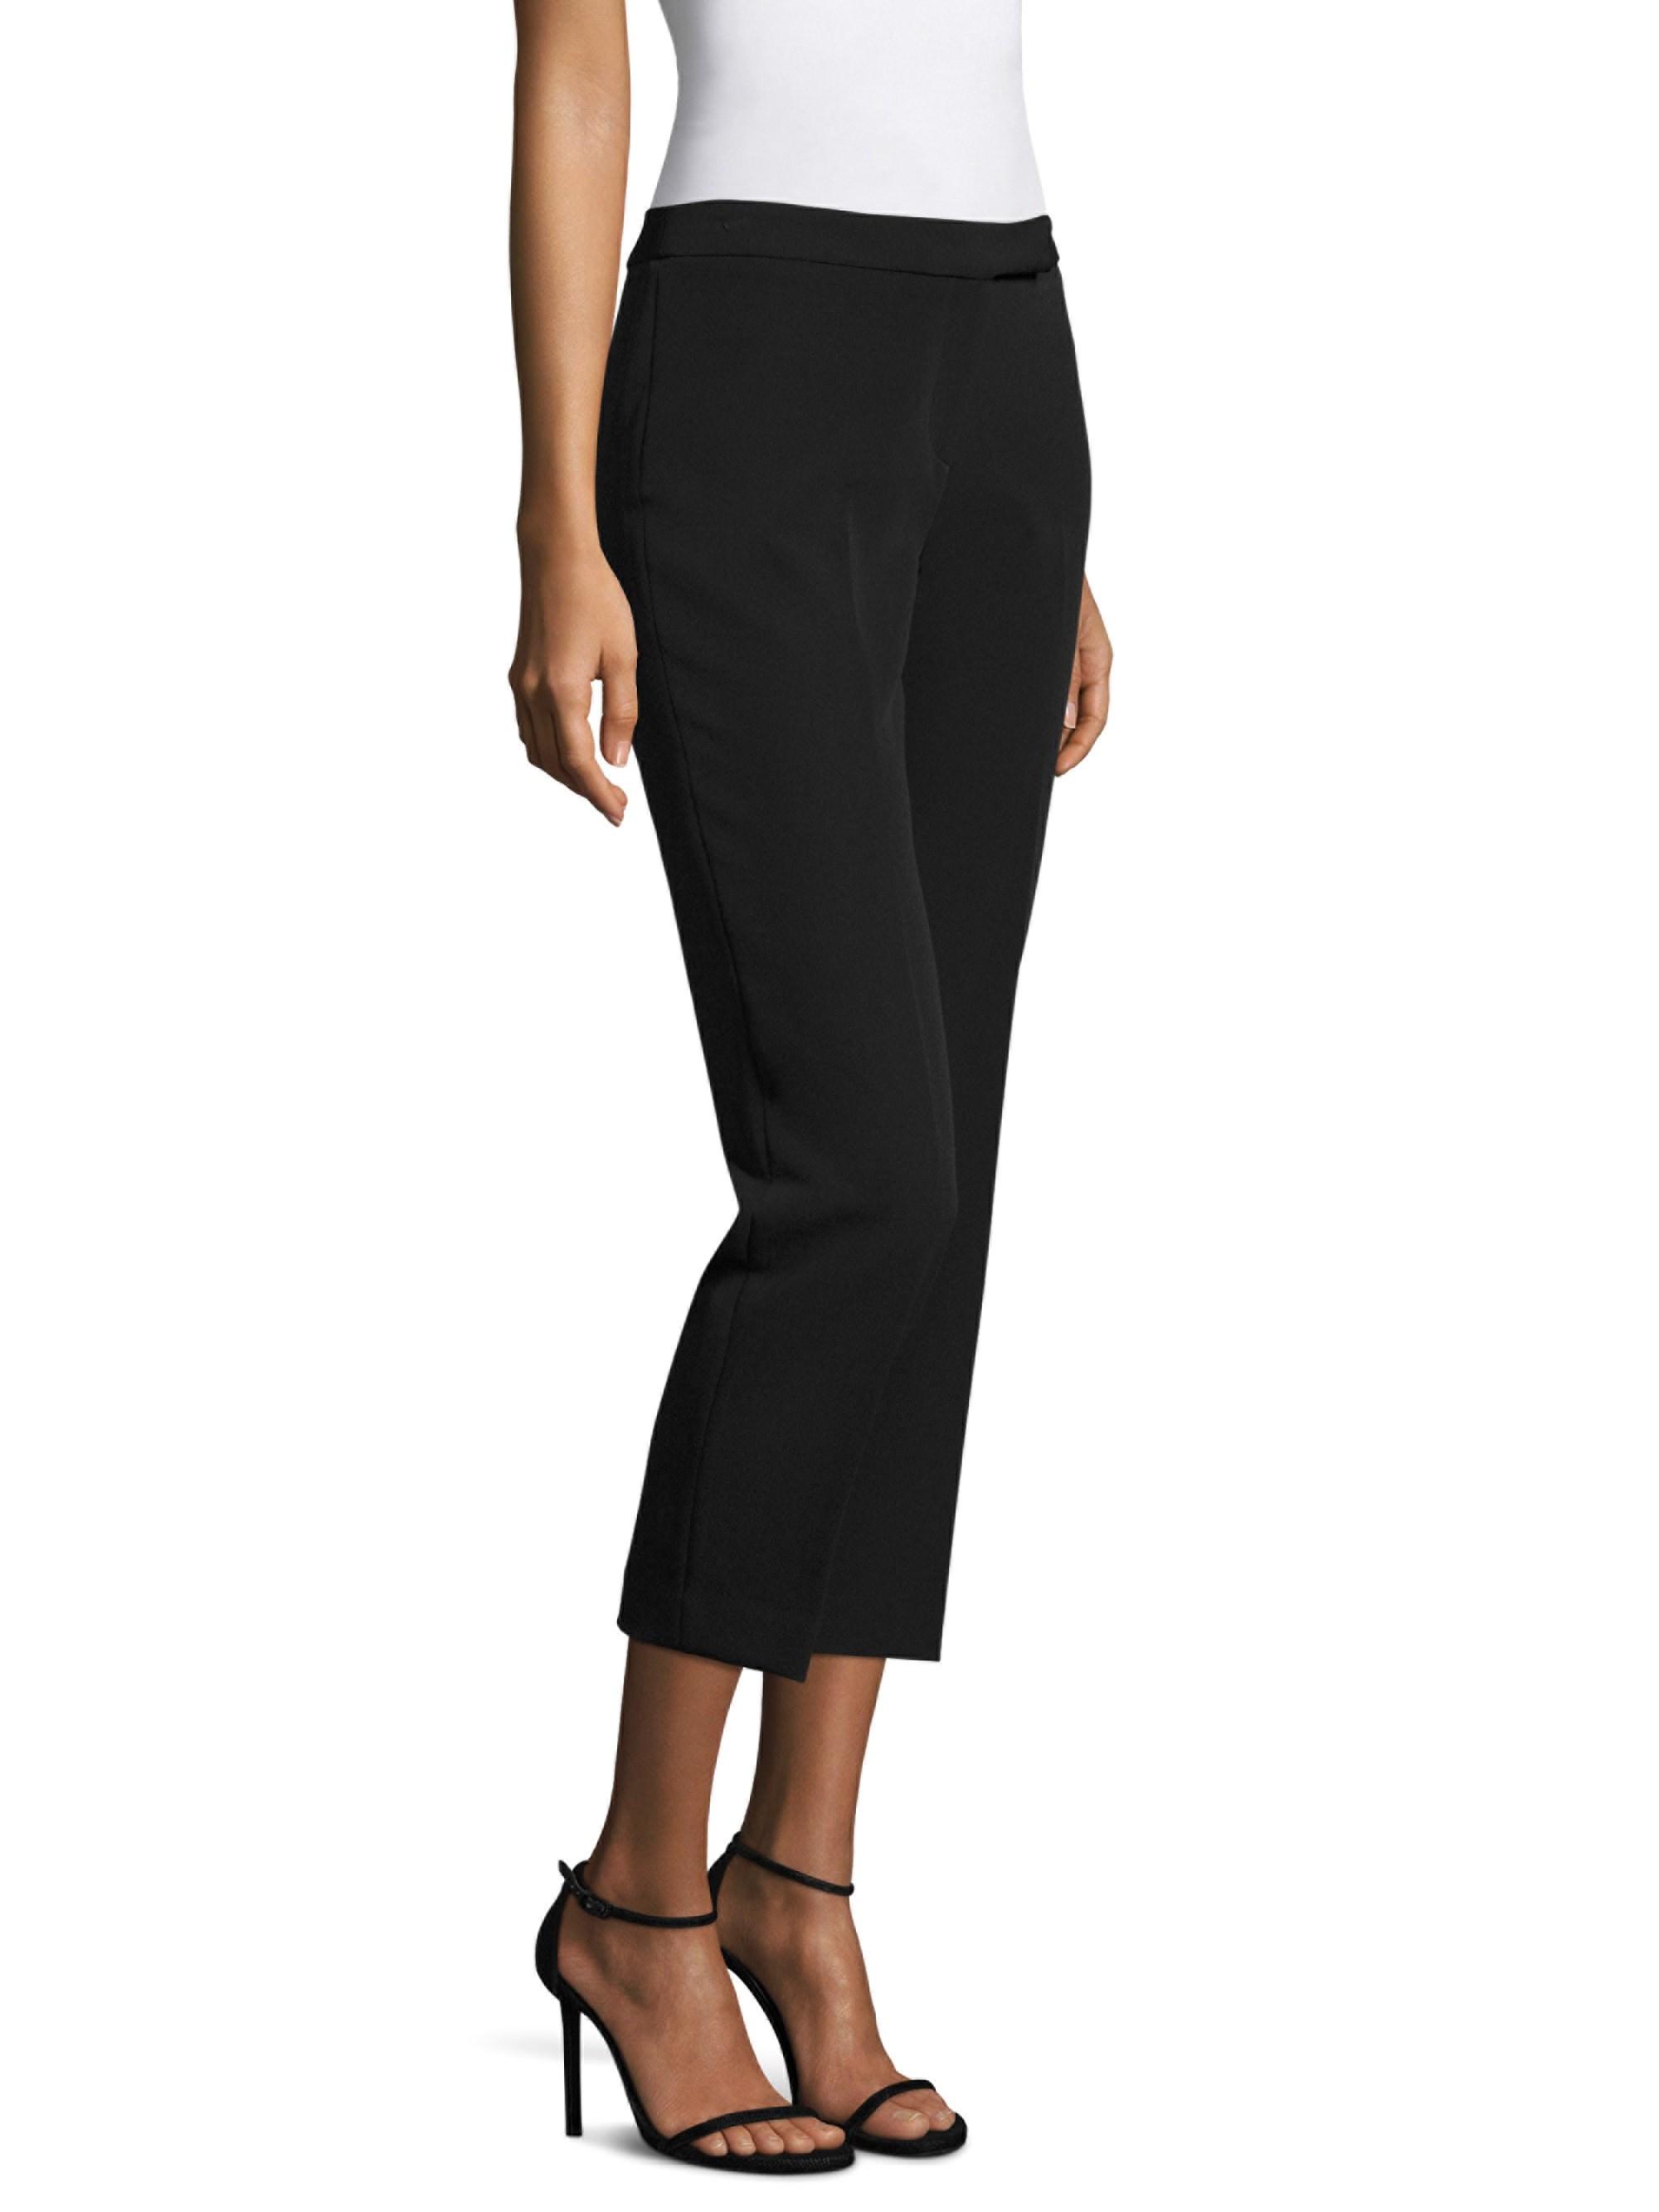 Lyst - MILLY Women's Cropped Cigarette Pants - Black - Size 0 in Black